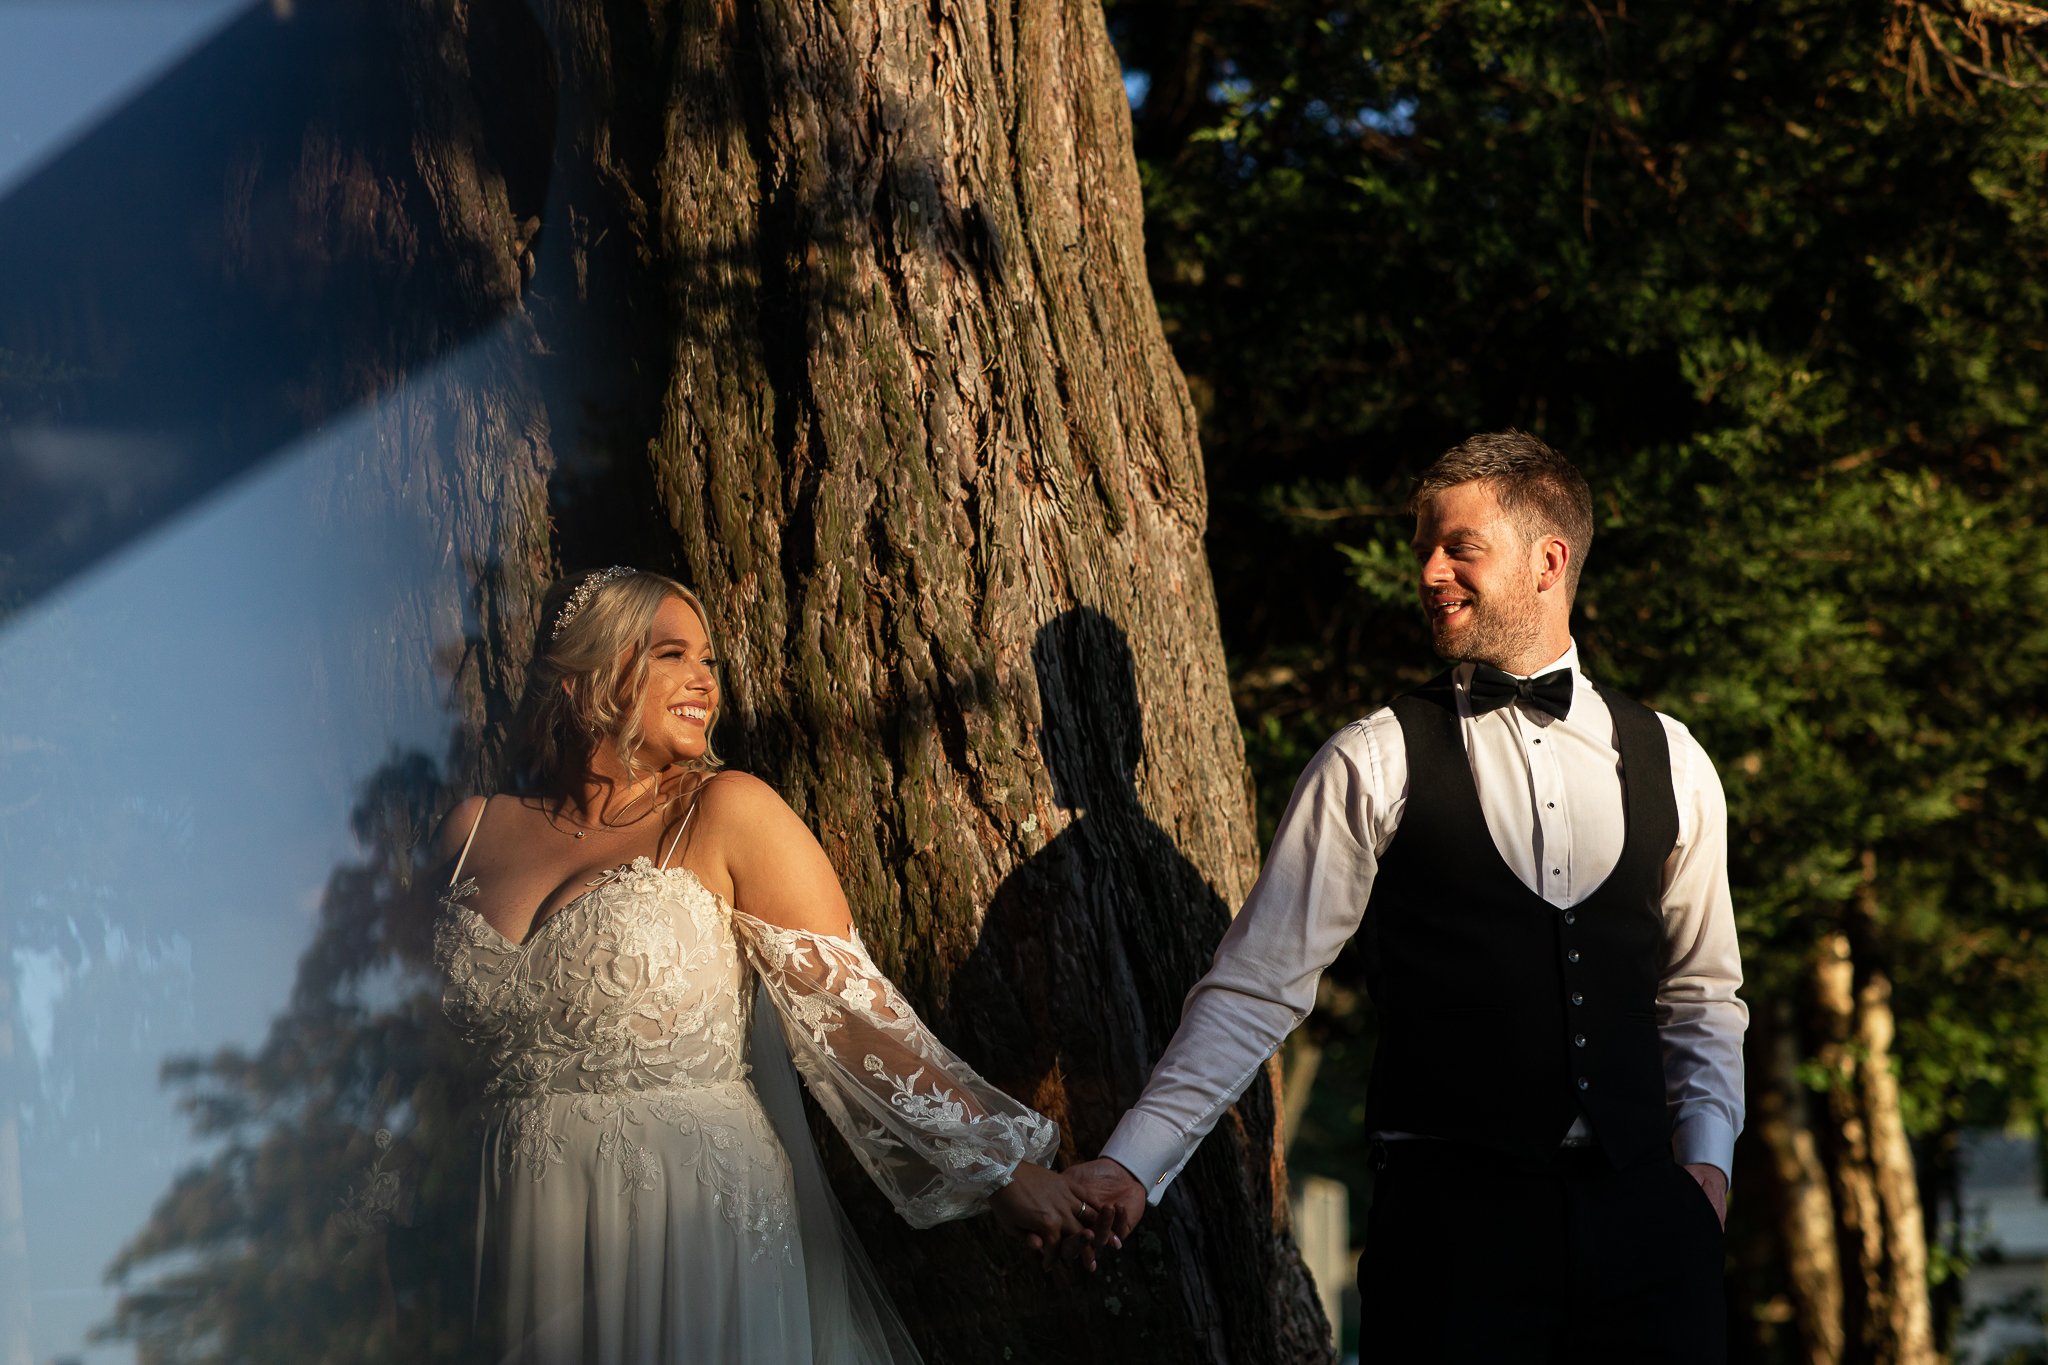 Wedding photos at Newpark Hotel Kilkenny by local award-winning photographer Daragh McCann